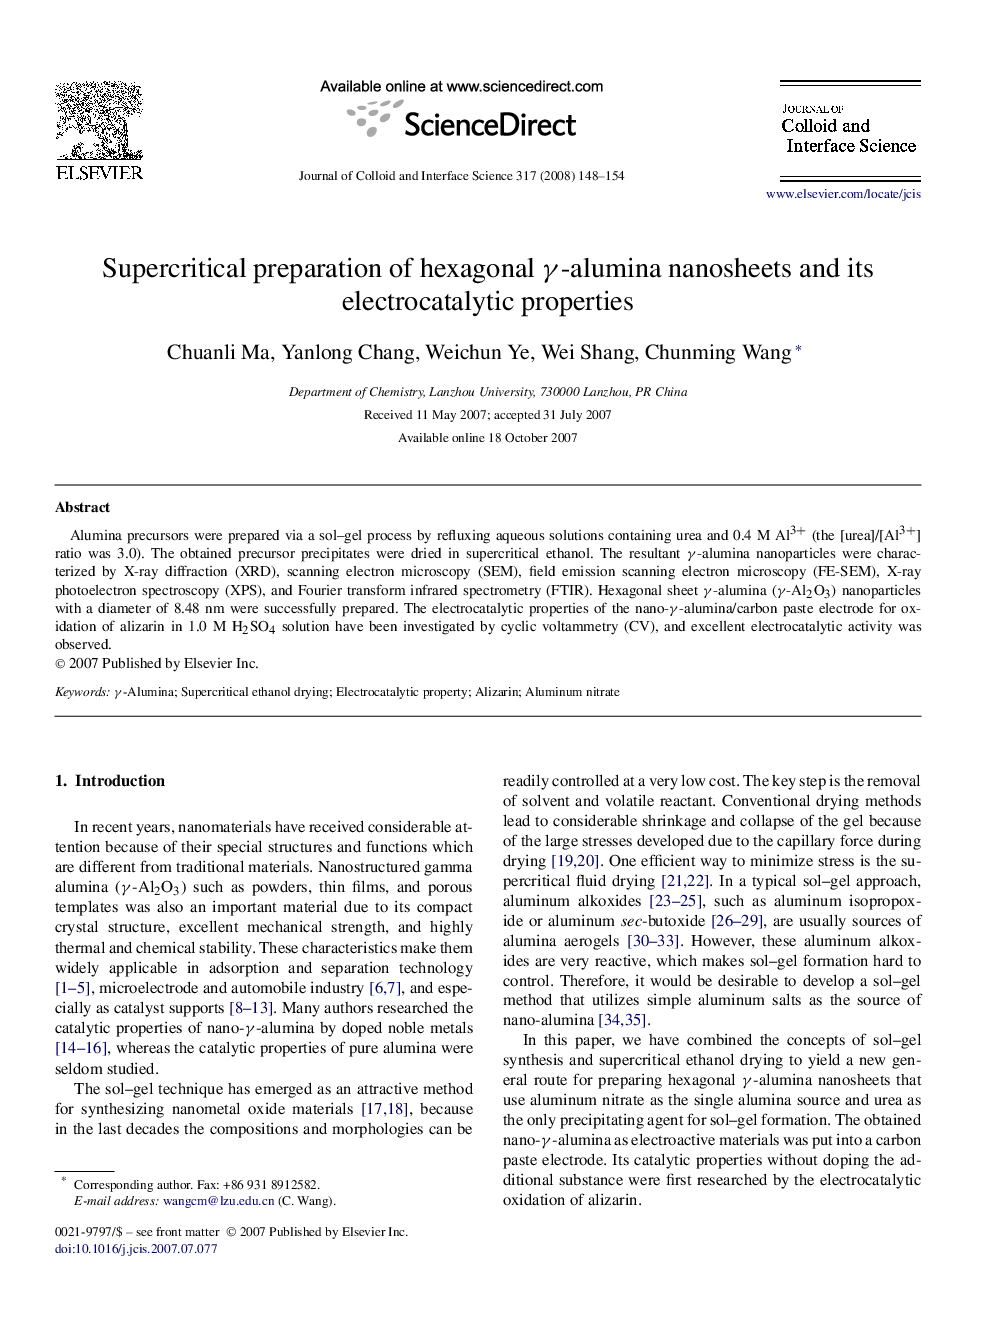 Supercritical preparation of hexagonal γ-alumina nanosheets and its electrocatalytic properties